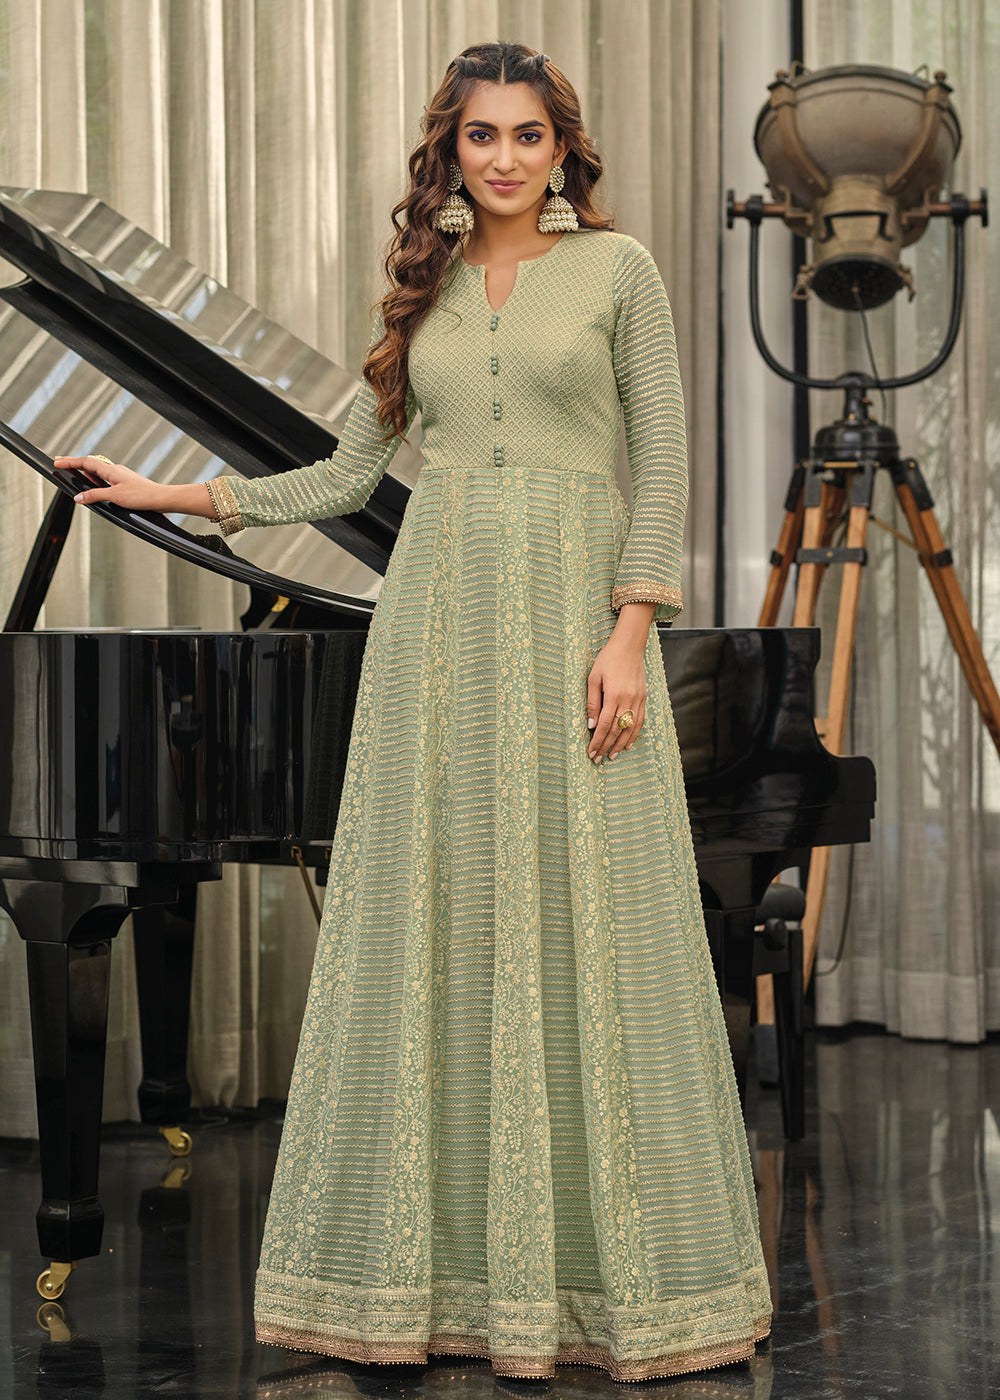 Buy Now Laurel Green Embellished Georgette Function Anarkali Dress Online in USA, UK, Australia, New Zealand, Canada & Worldwide at Empress Clothing. 